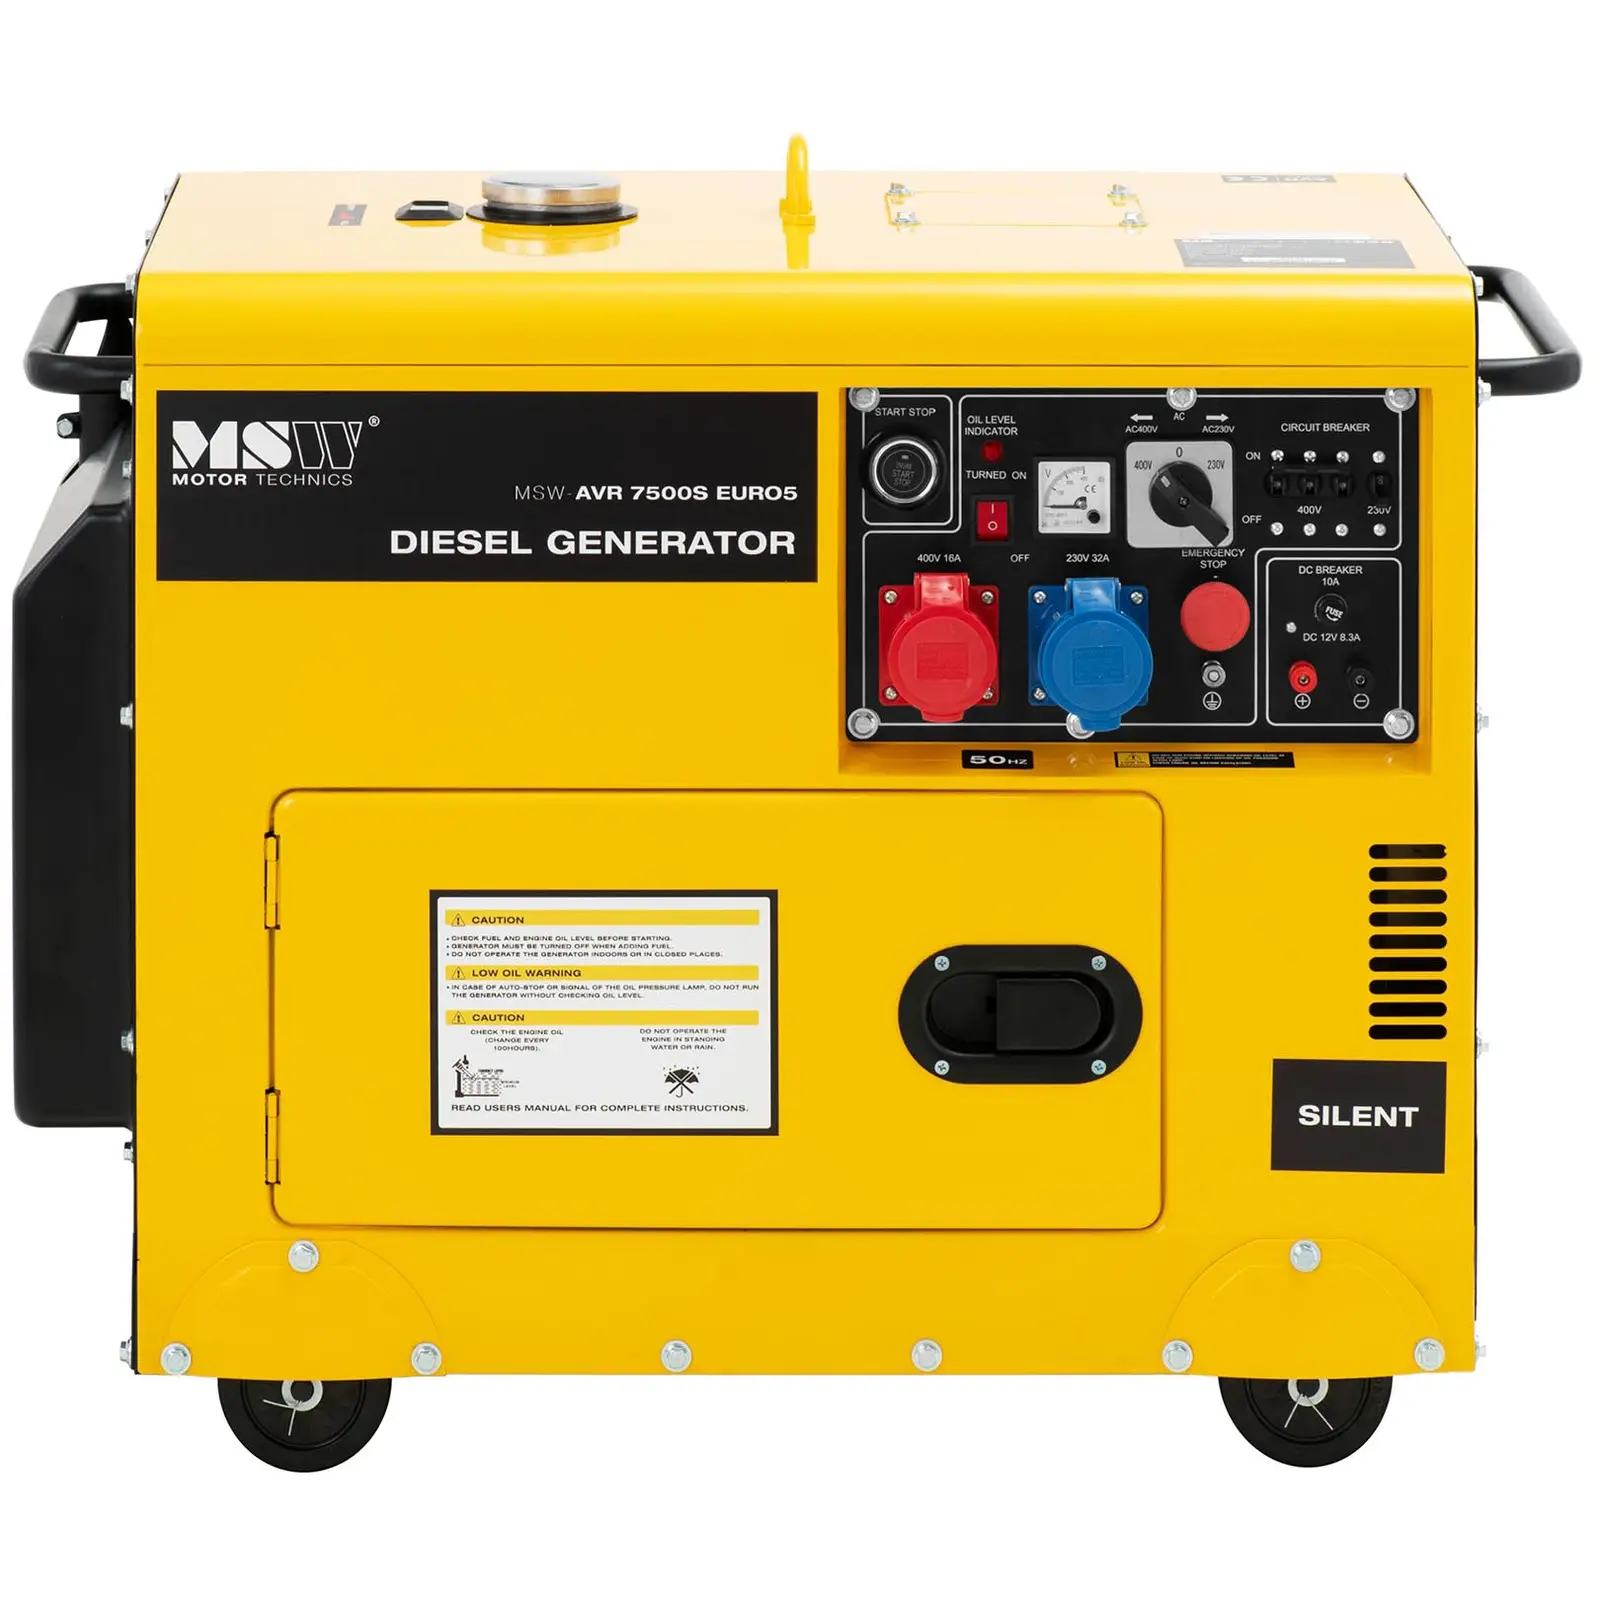 Dieselgenerator - 6370 / 7500 W - 16 L - 230/400 V - mobil - AVR - Euro 5